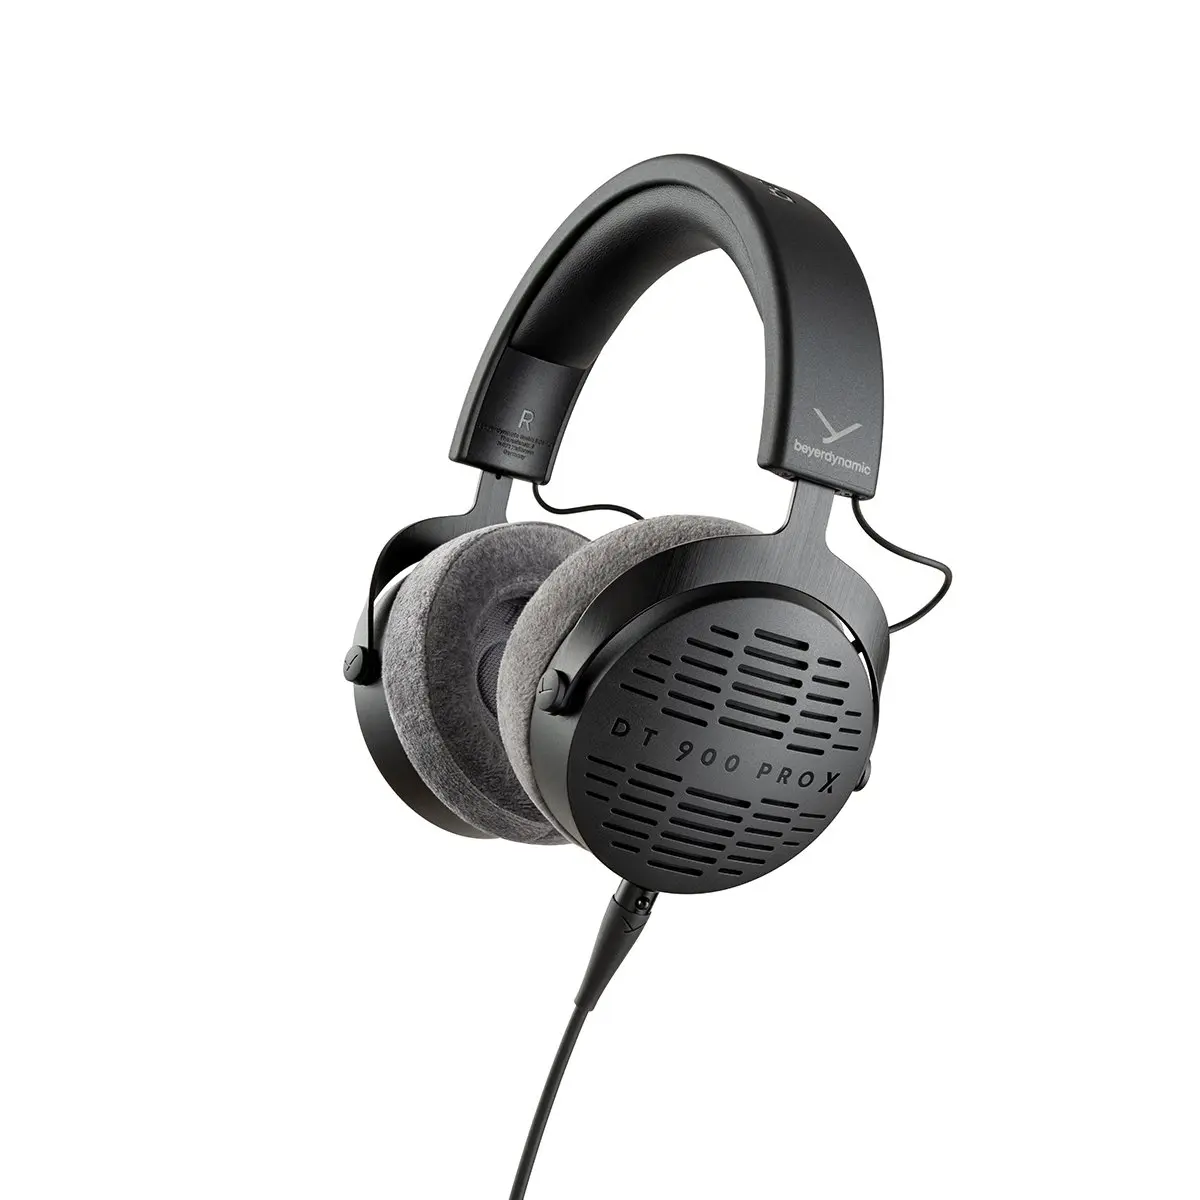 Beyerdynamic dt900 proX headphones